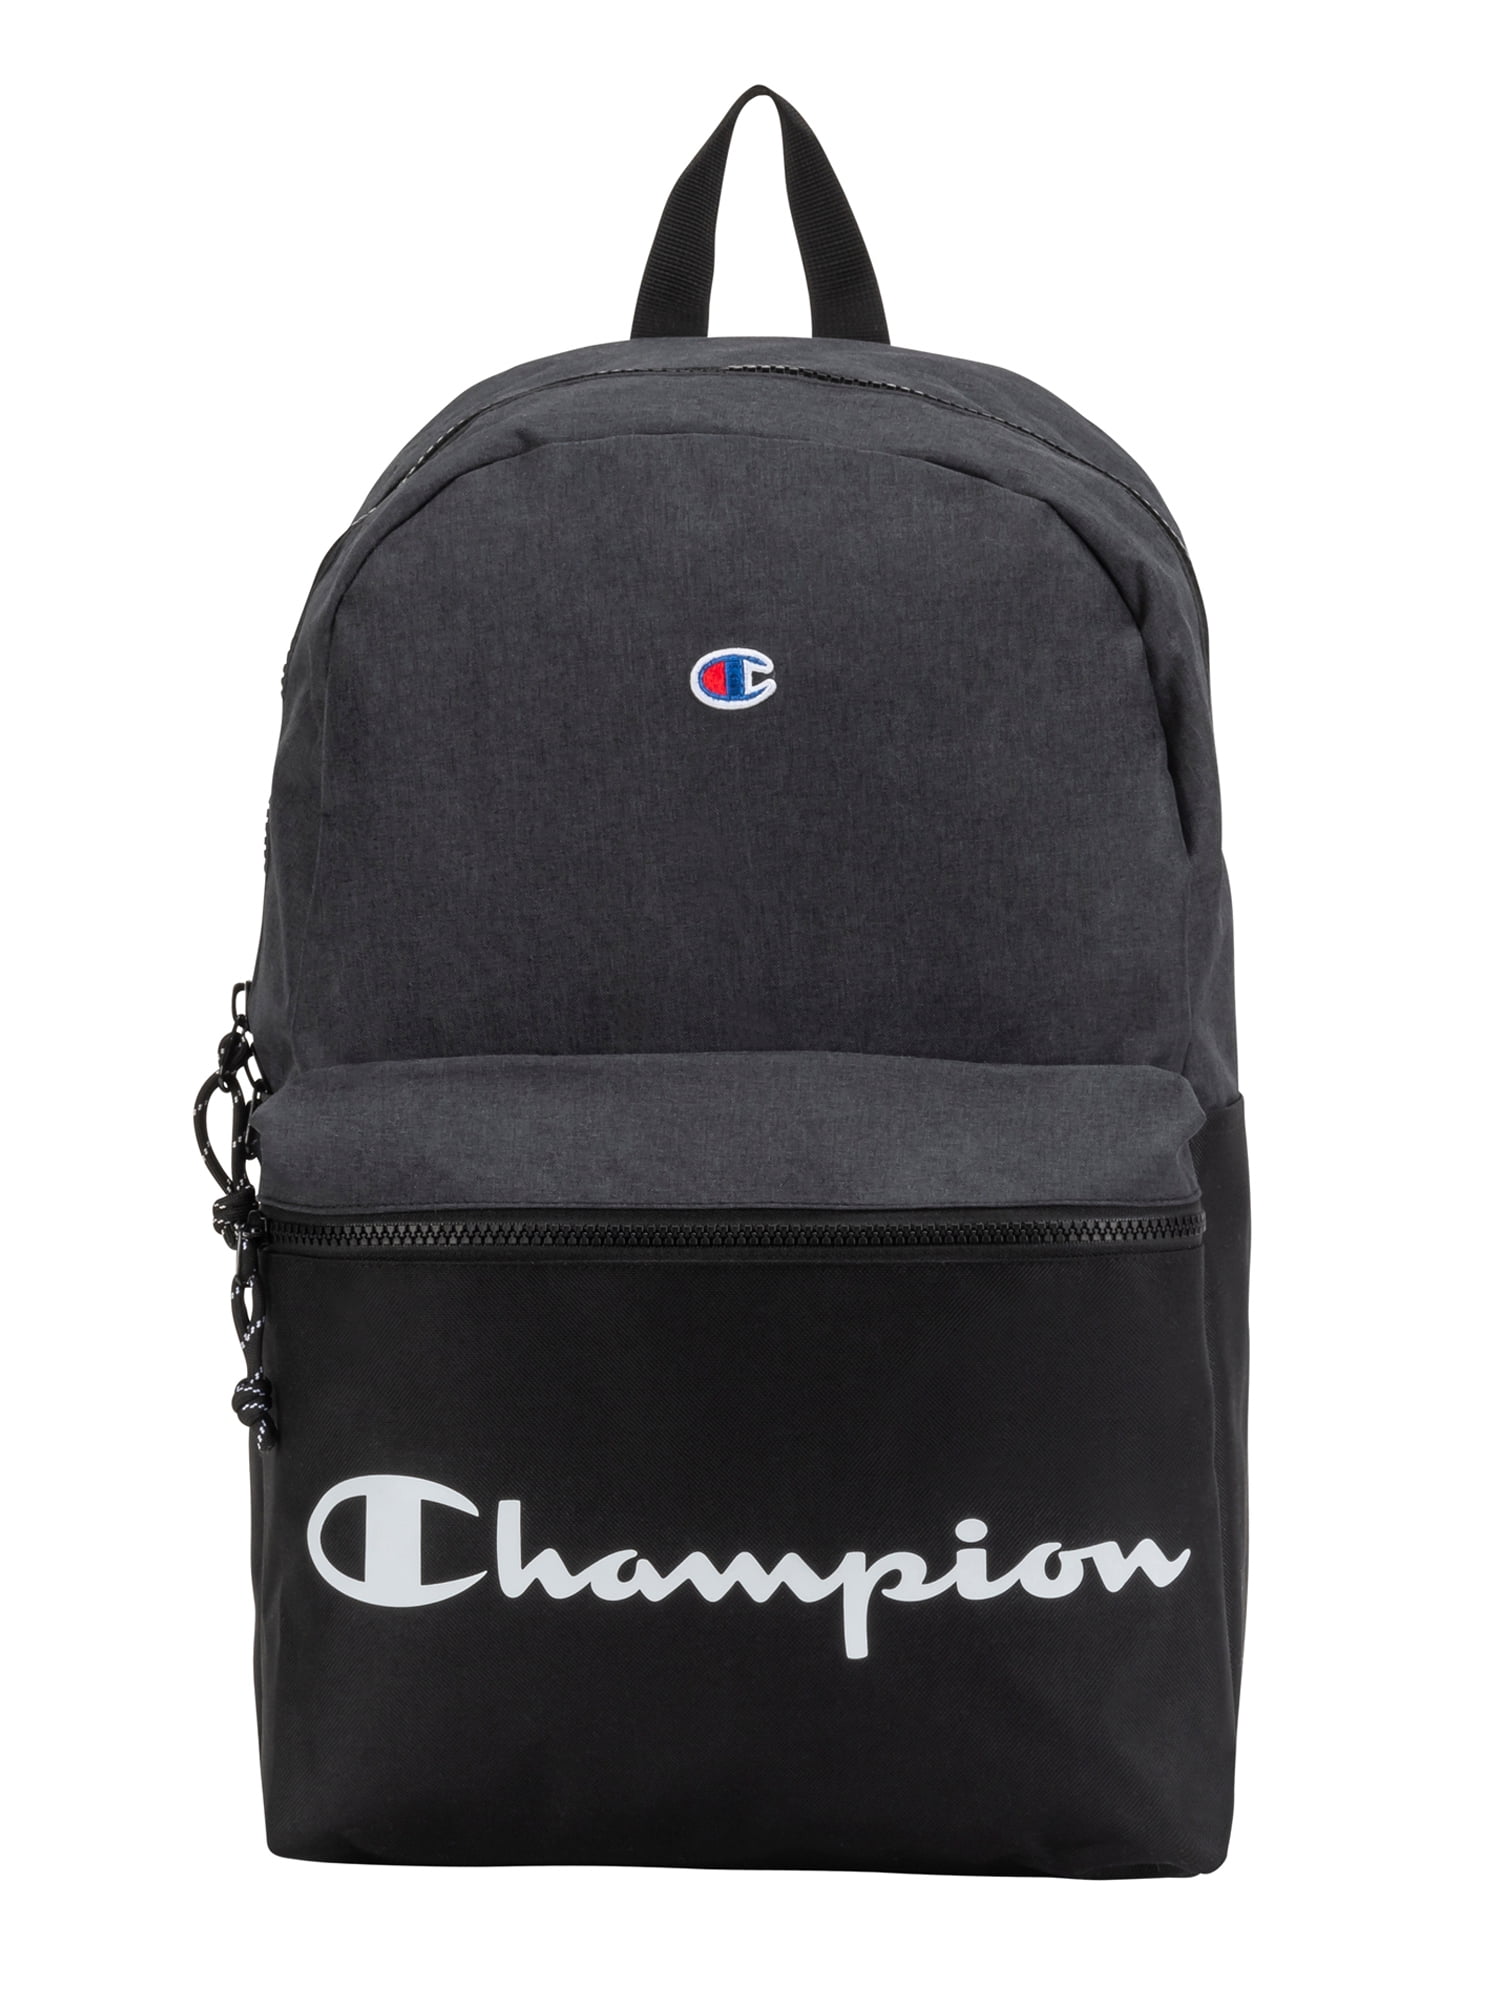 bag champion